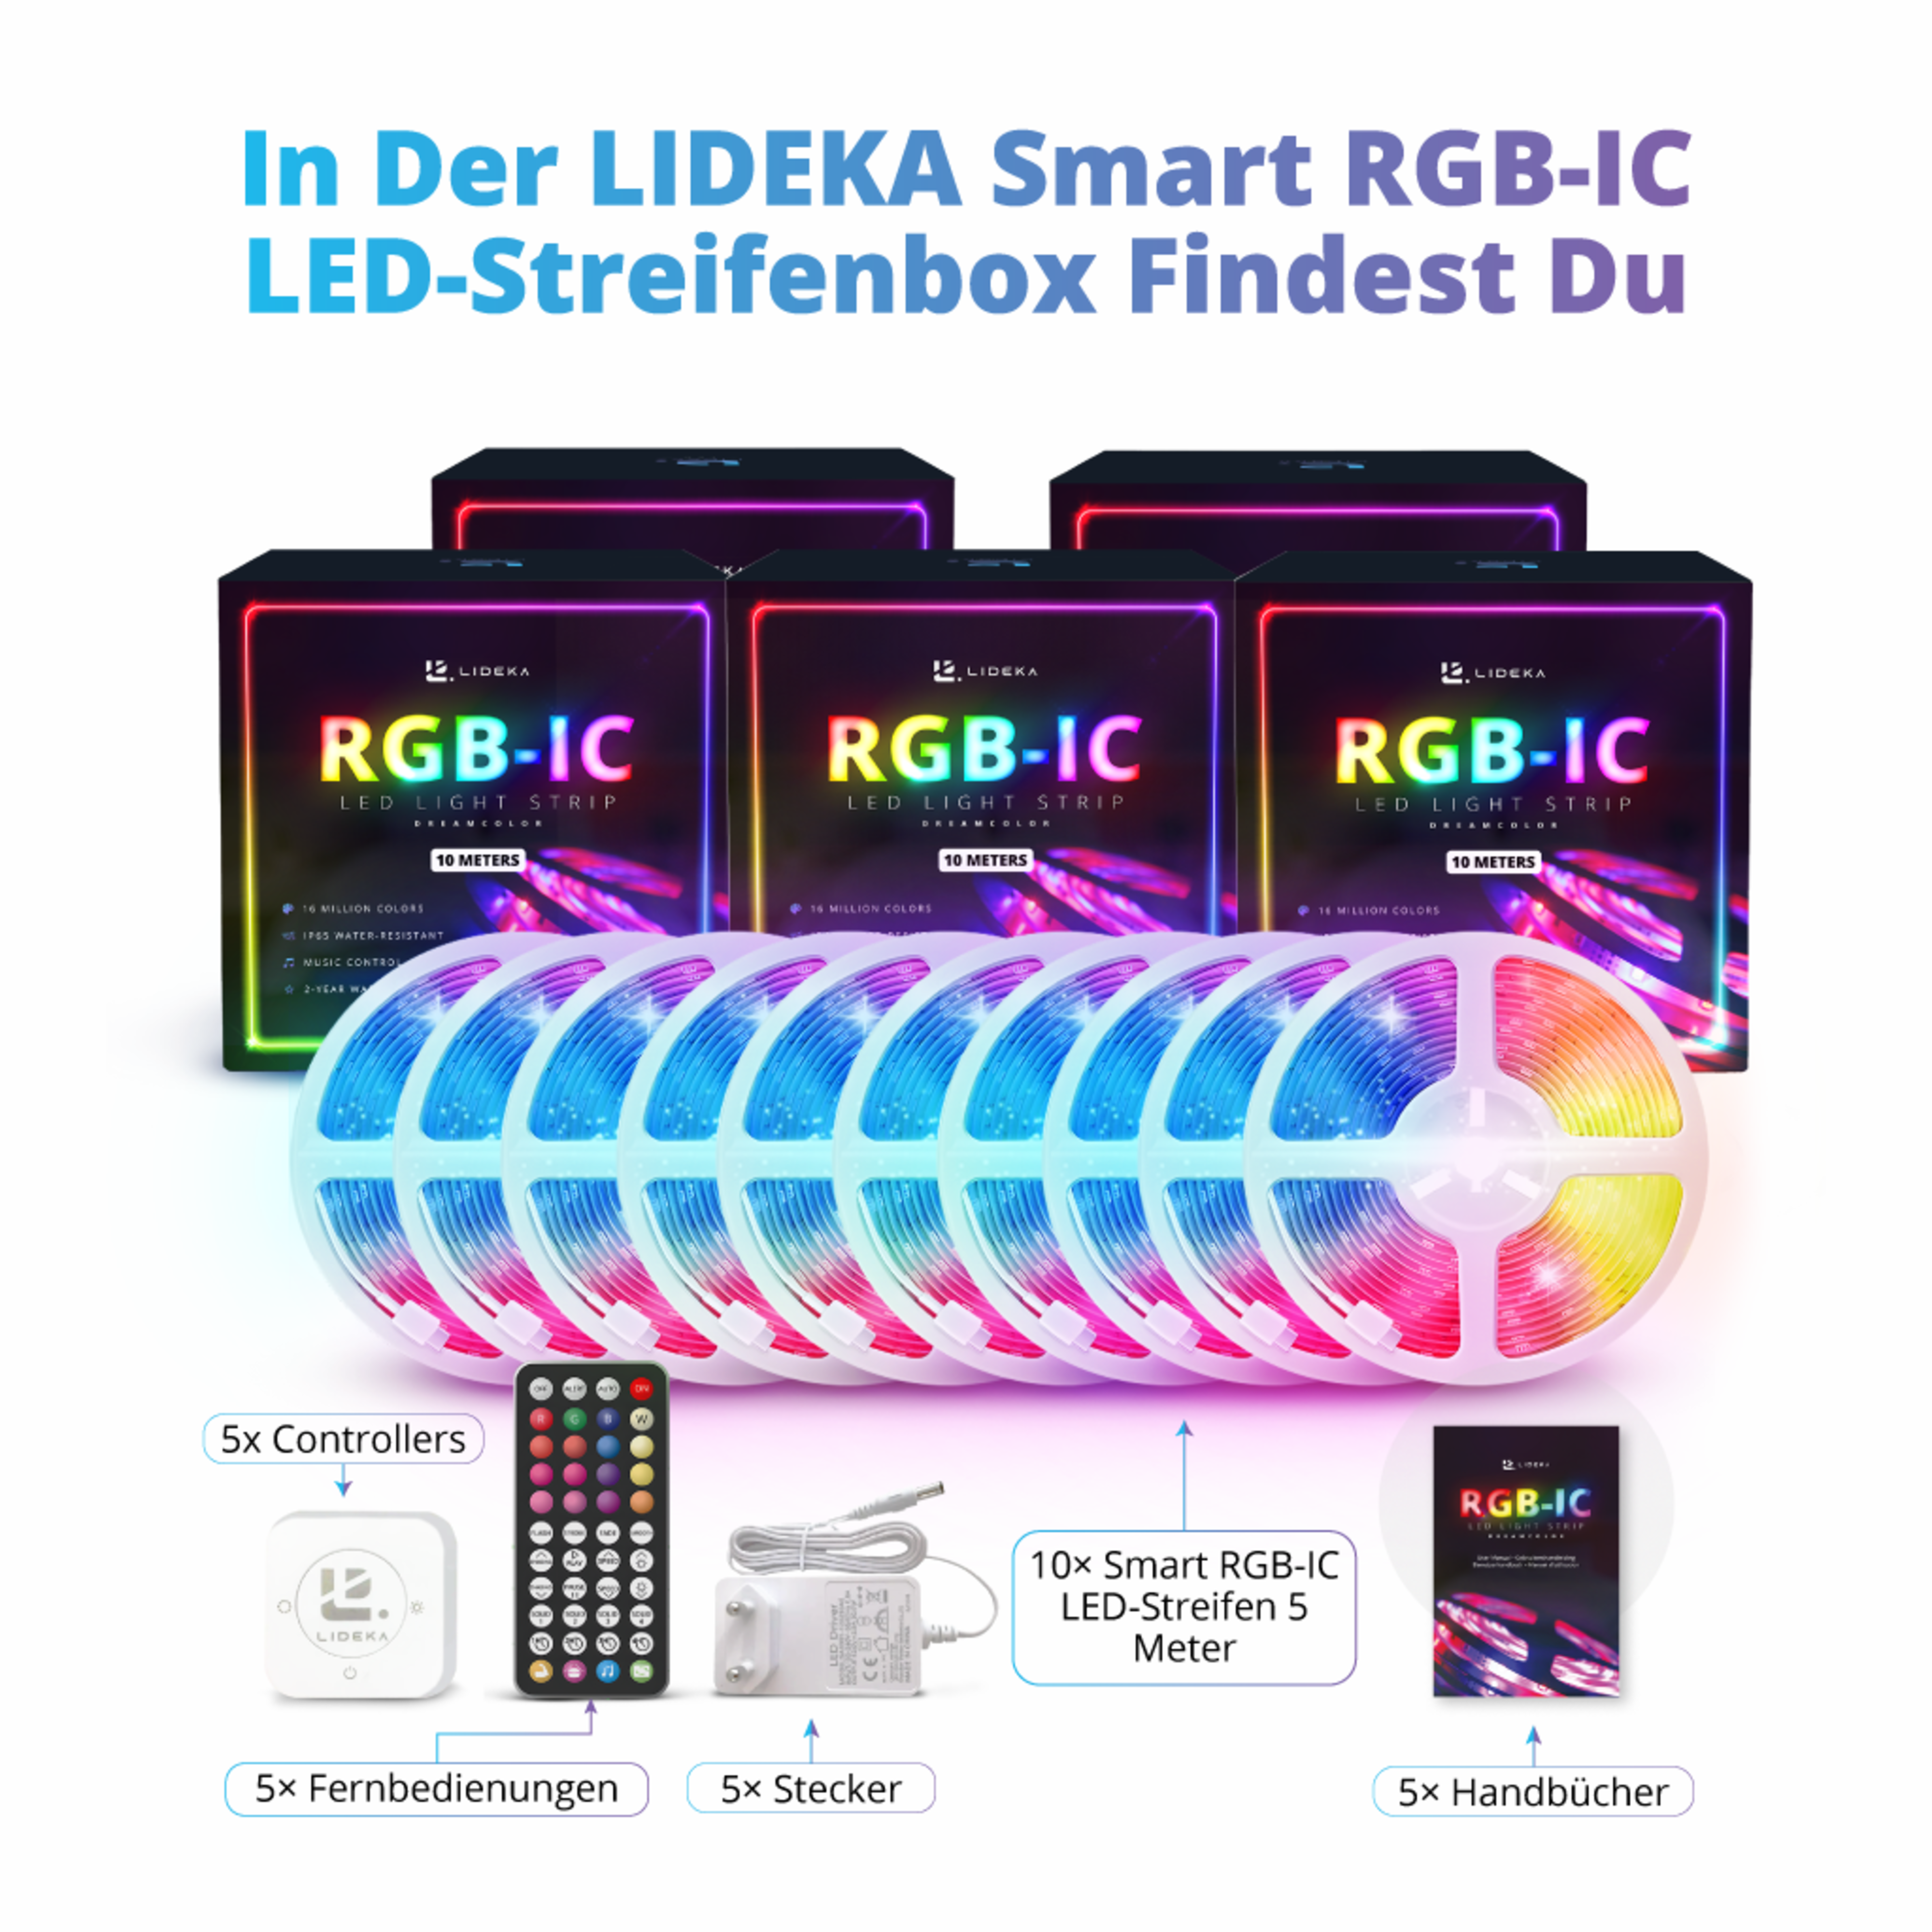 40m LIDEKA LED LED-Streifen RGBIC Multicolors Regenbogen strips